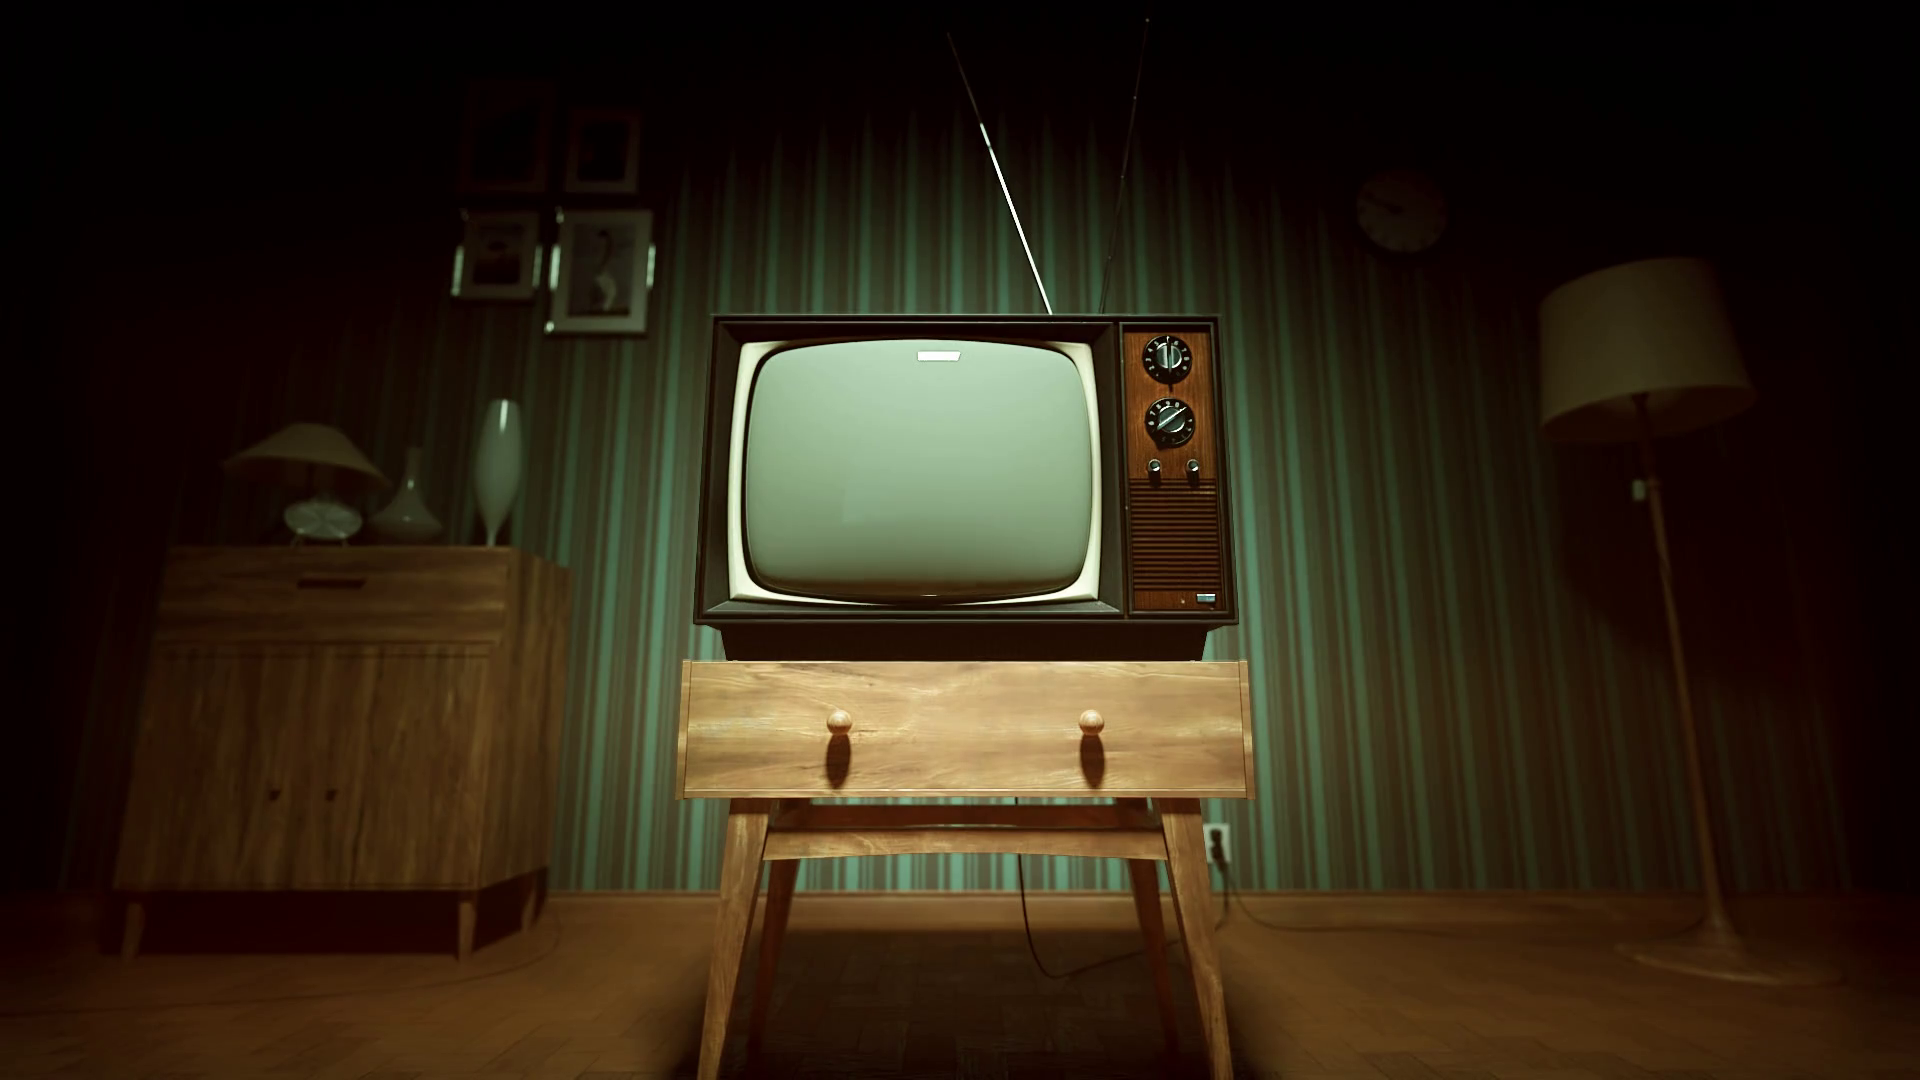 Озвучивай телевизор. Старый телевизор. Старинный телевизор. Старый телевизор в комнате. Ретро телевизор.